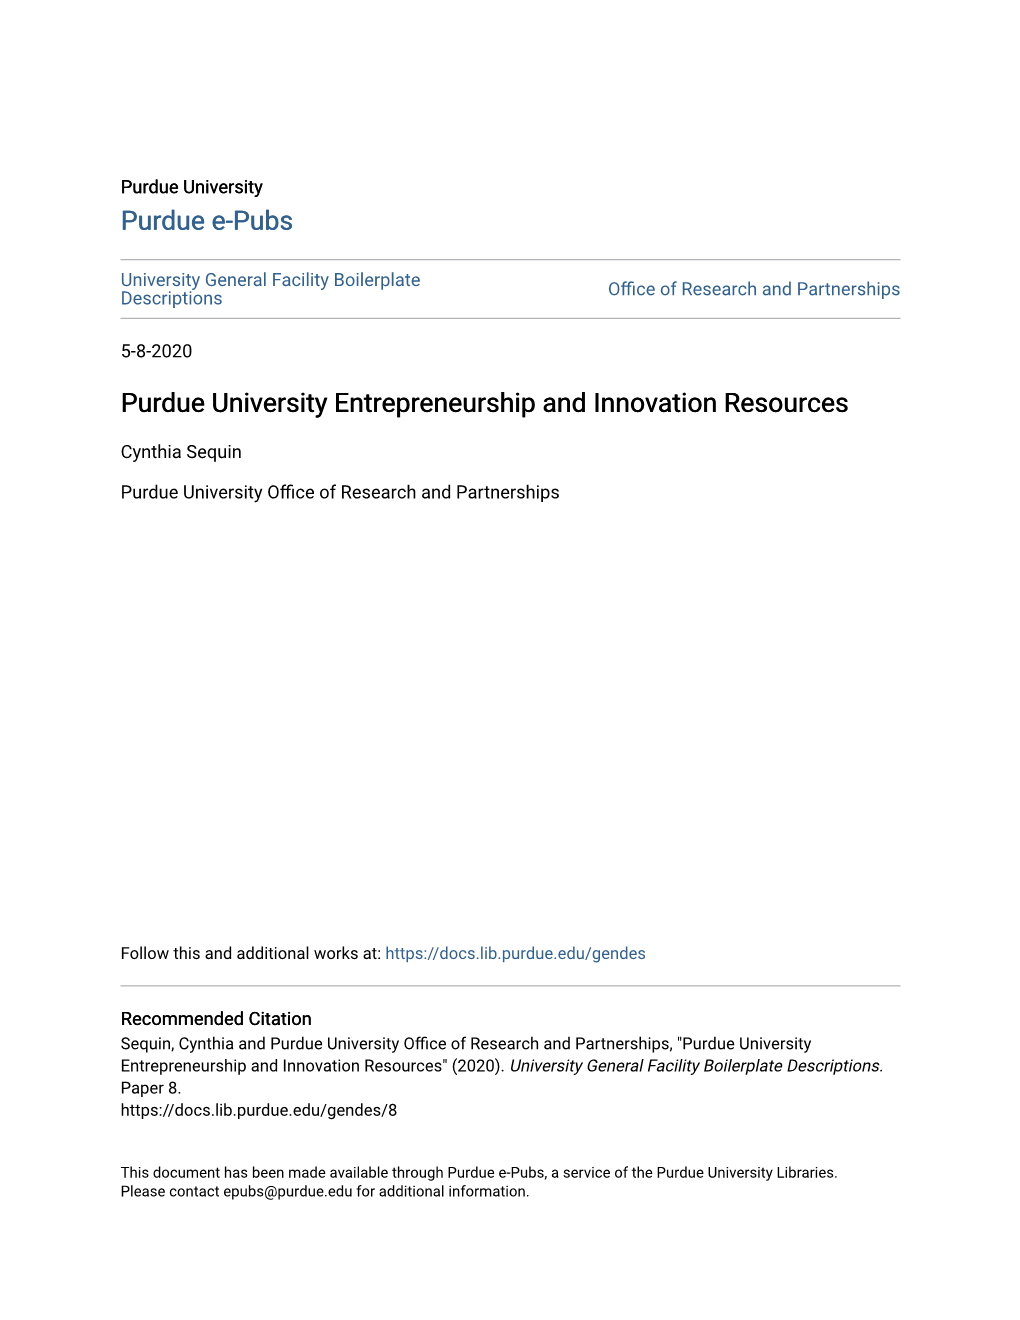 Purdue University Entrepreneurship and Innovation Resources